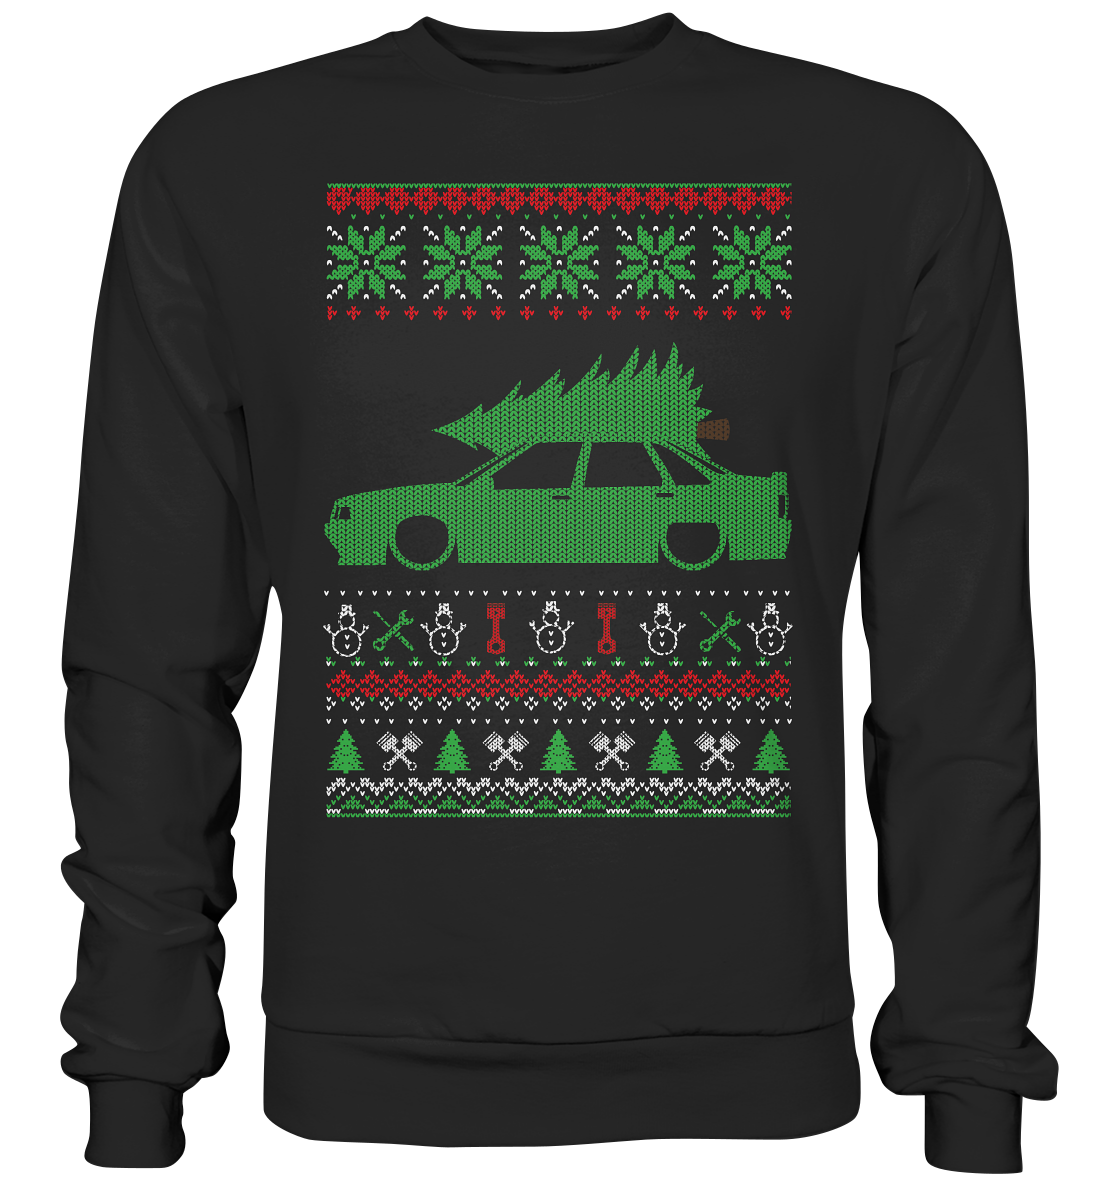 CODUGLY_RGK21TL - Premium Sweatshirt